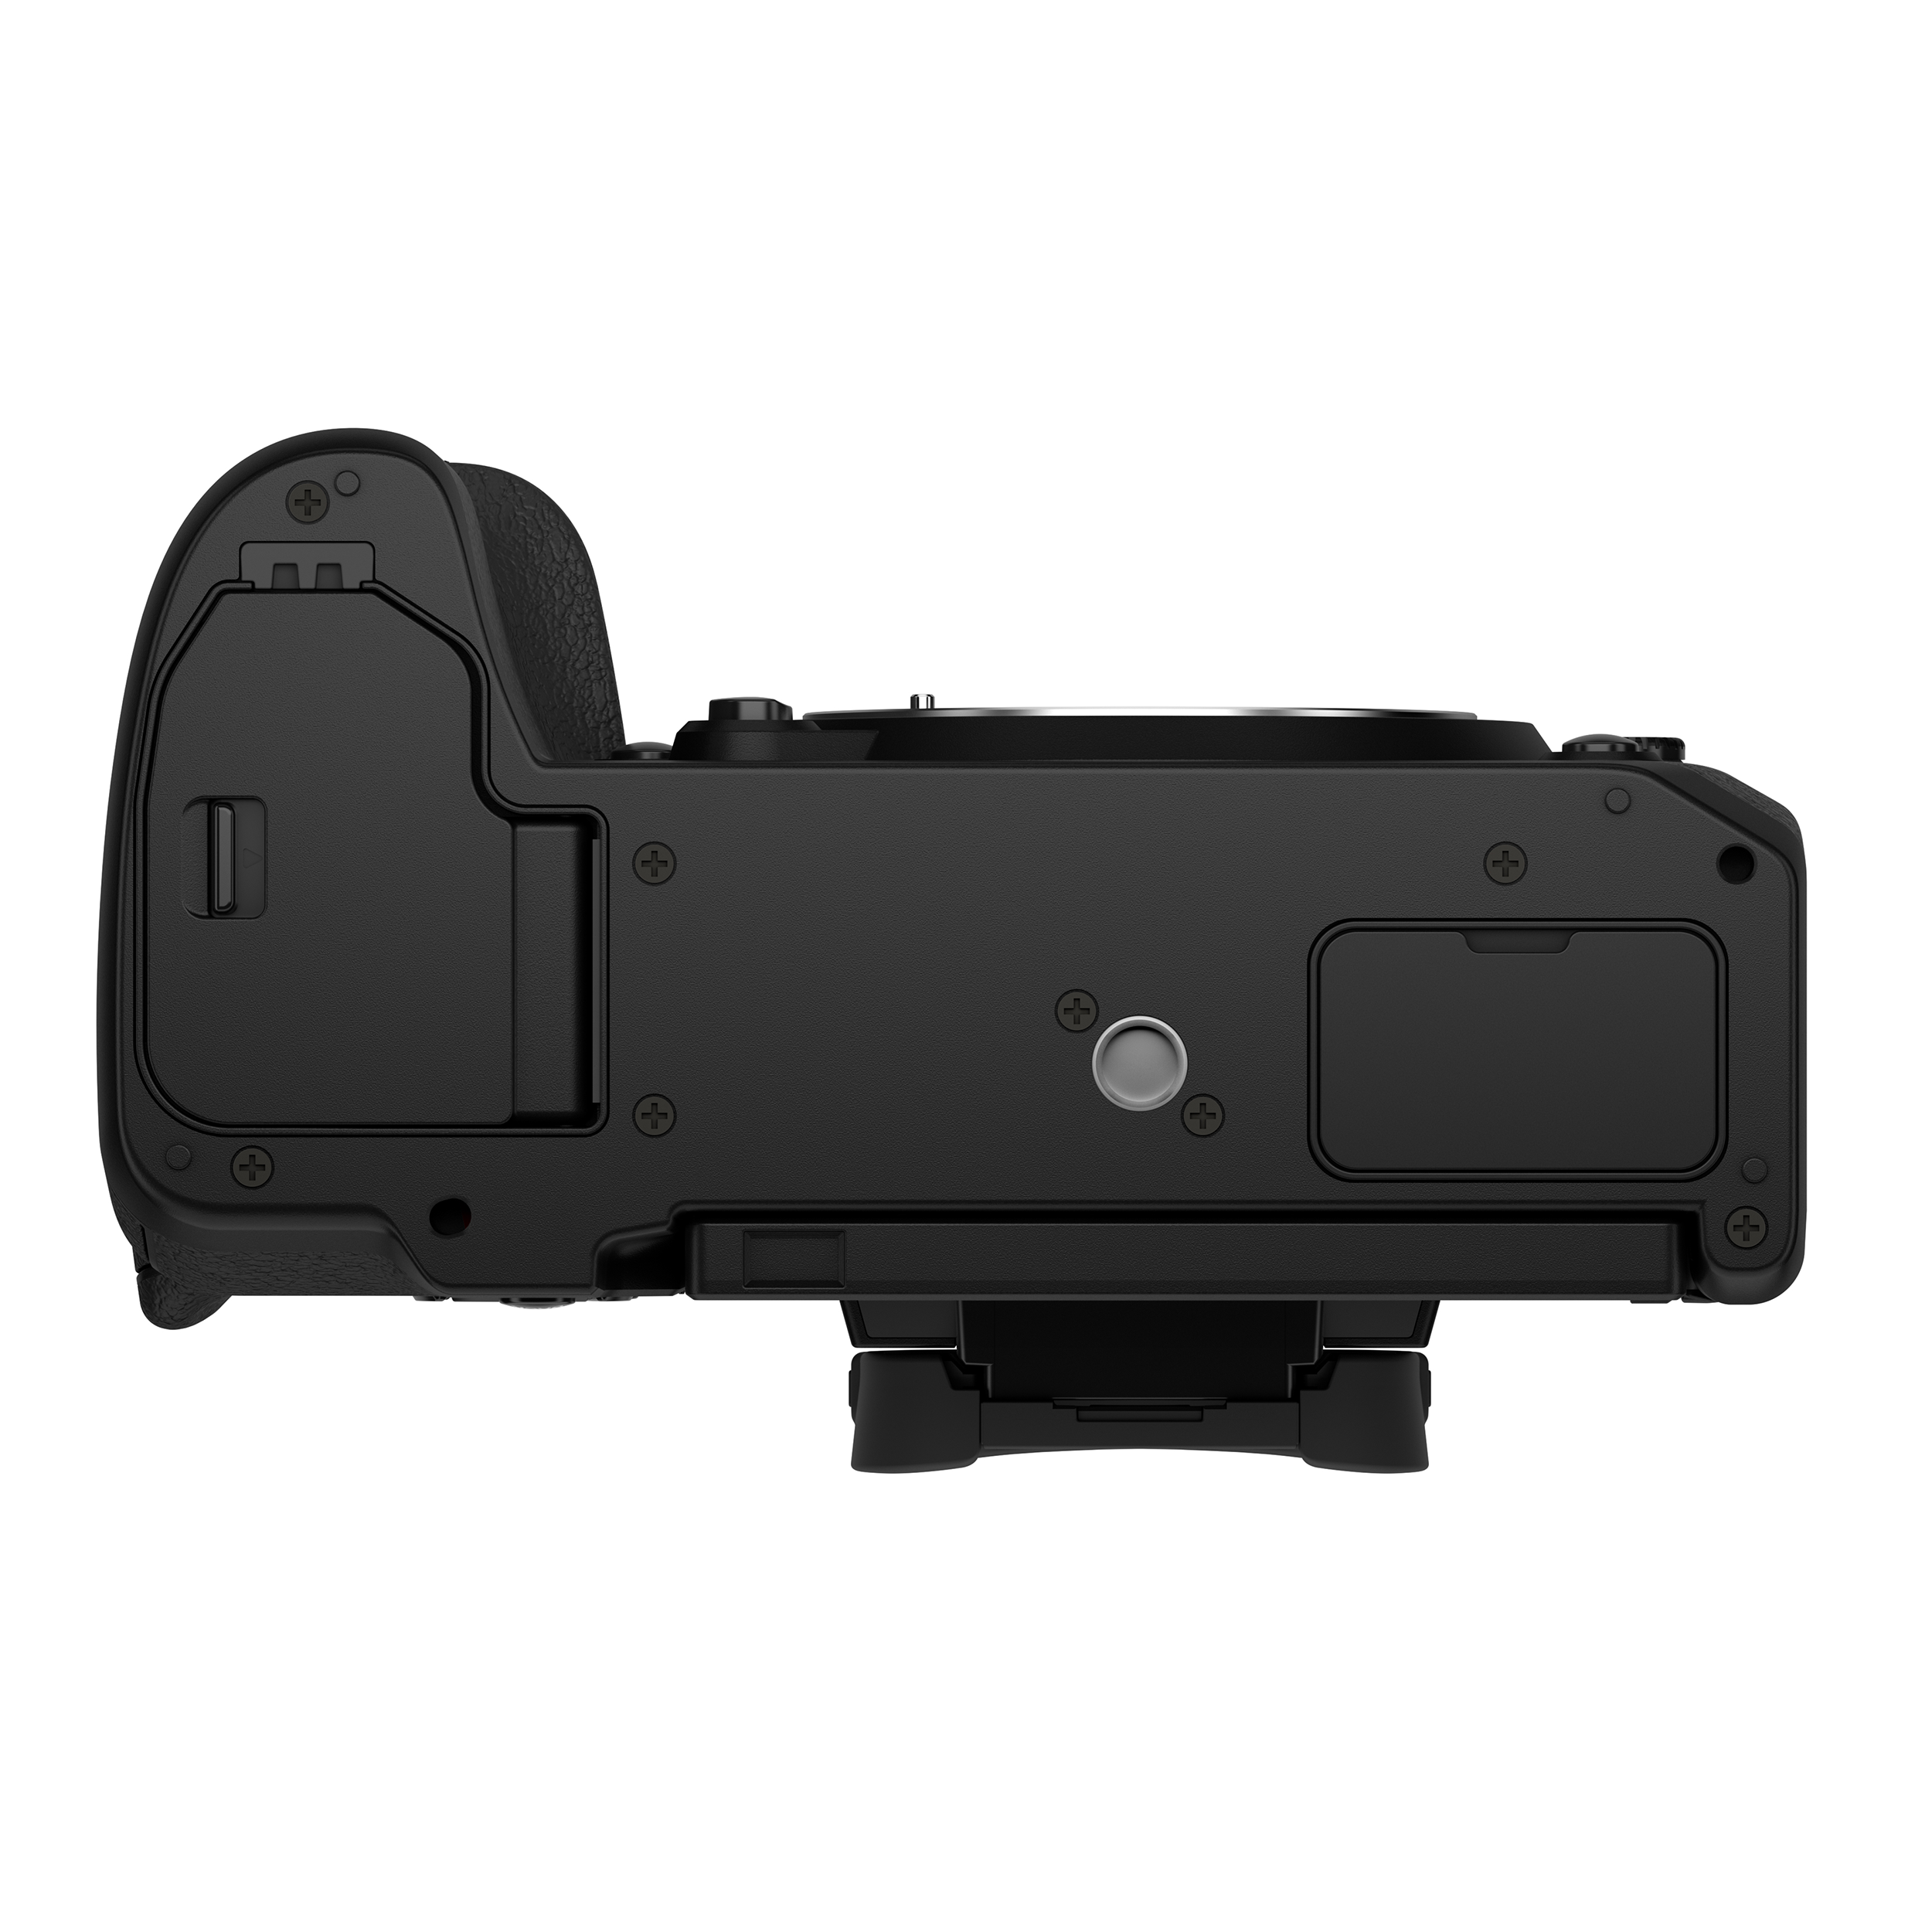 FUJIFILM X-H2 Mirrorless Camera with FUJINON XF16-80mmF4 R OIS WR Lens Kit, Black